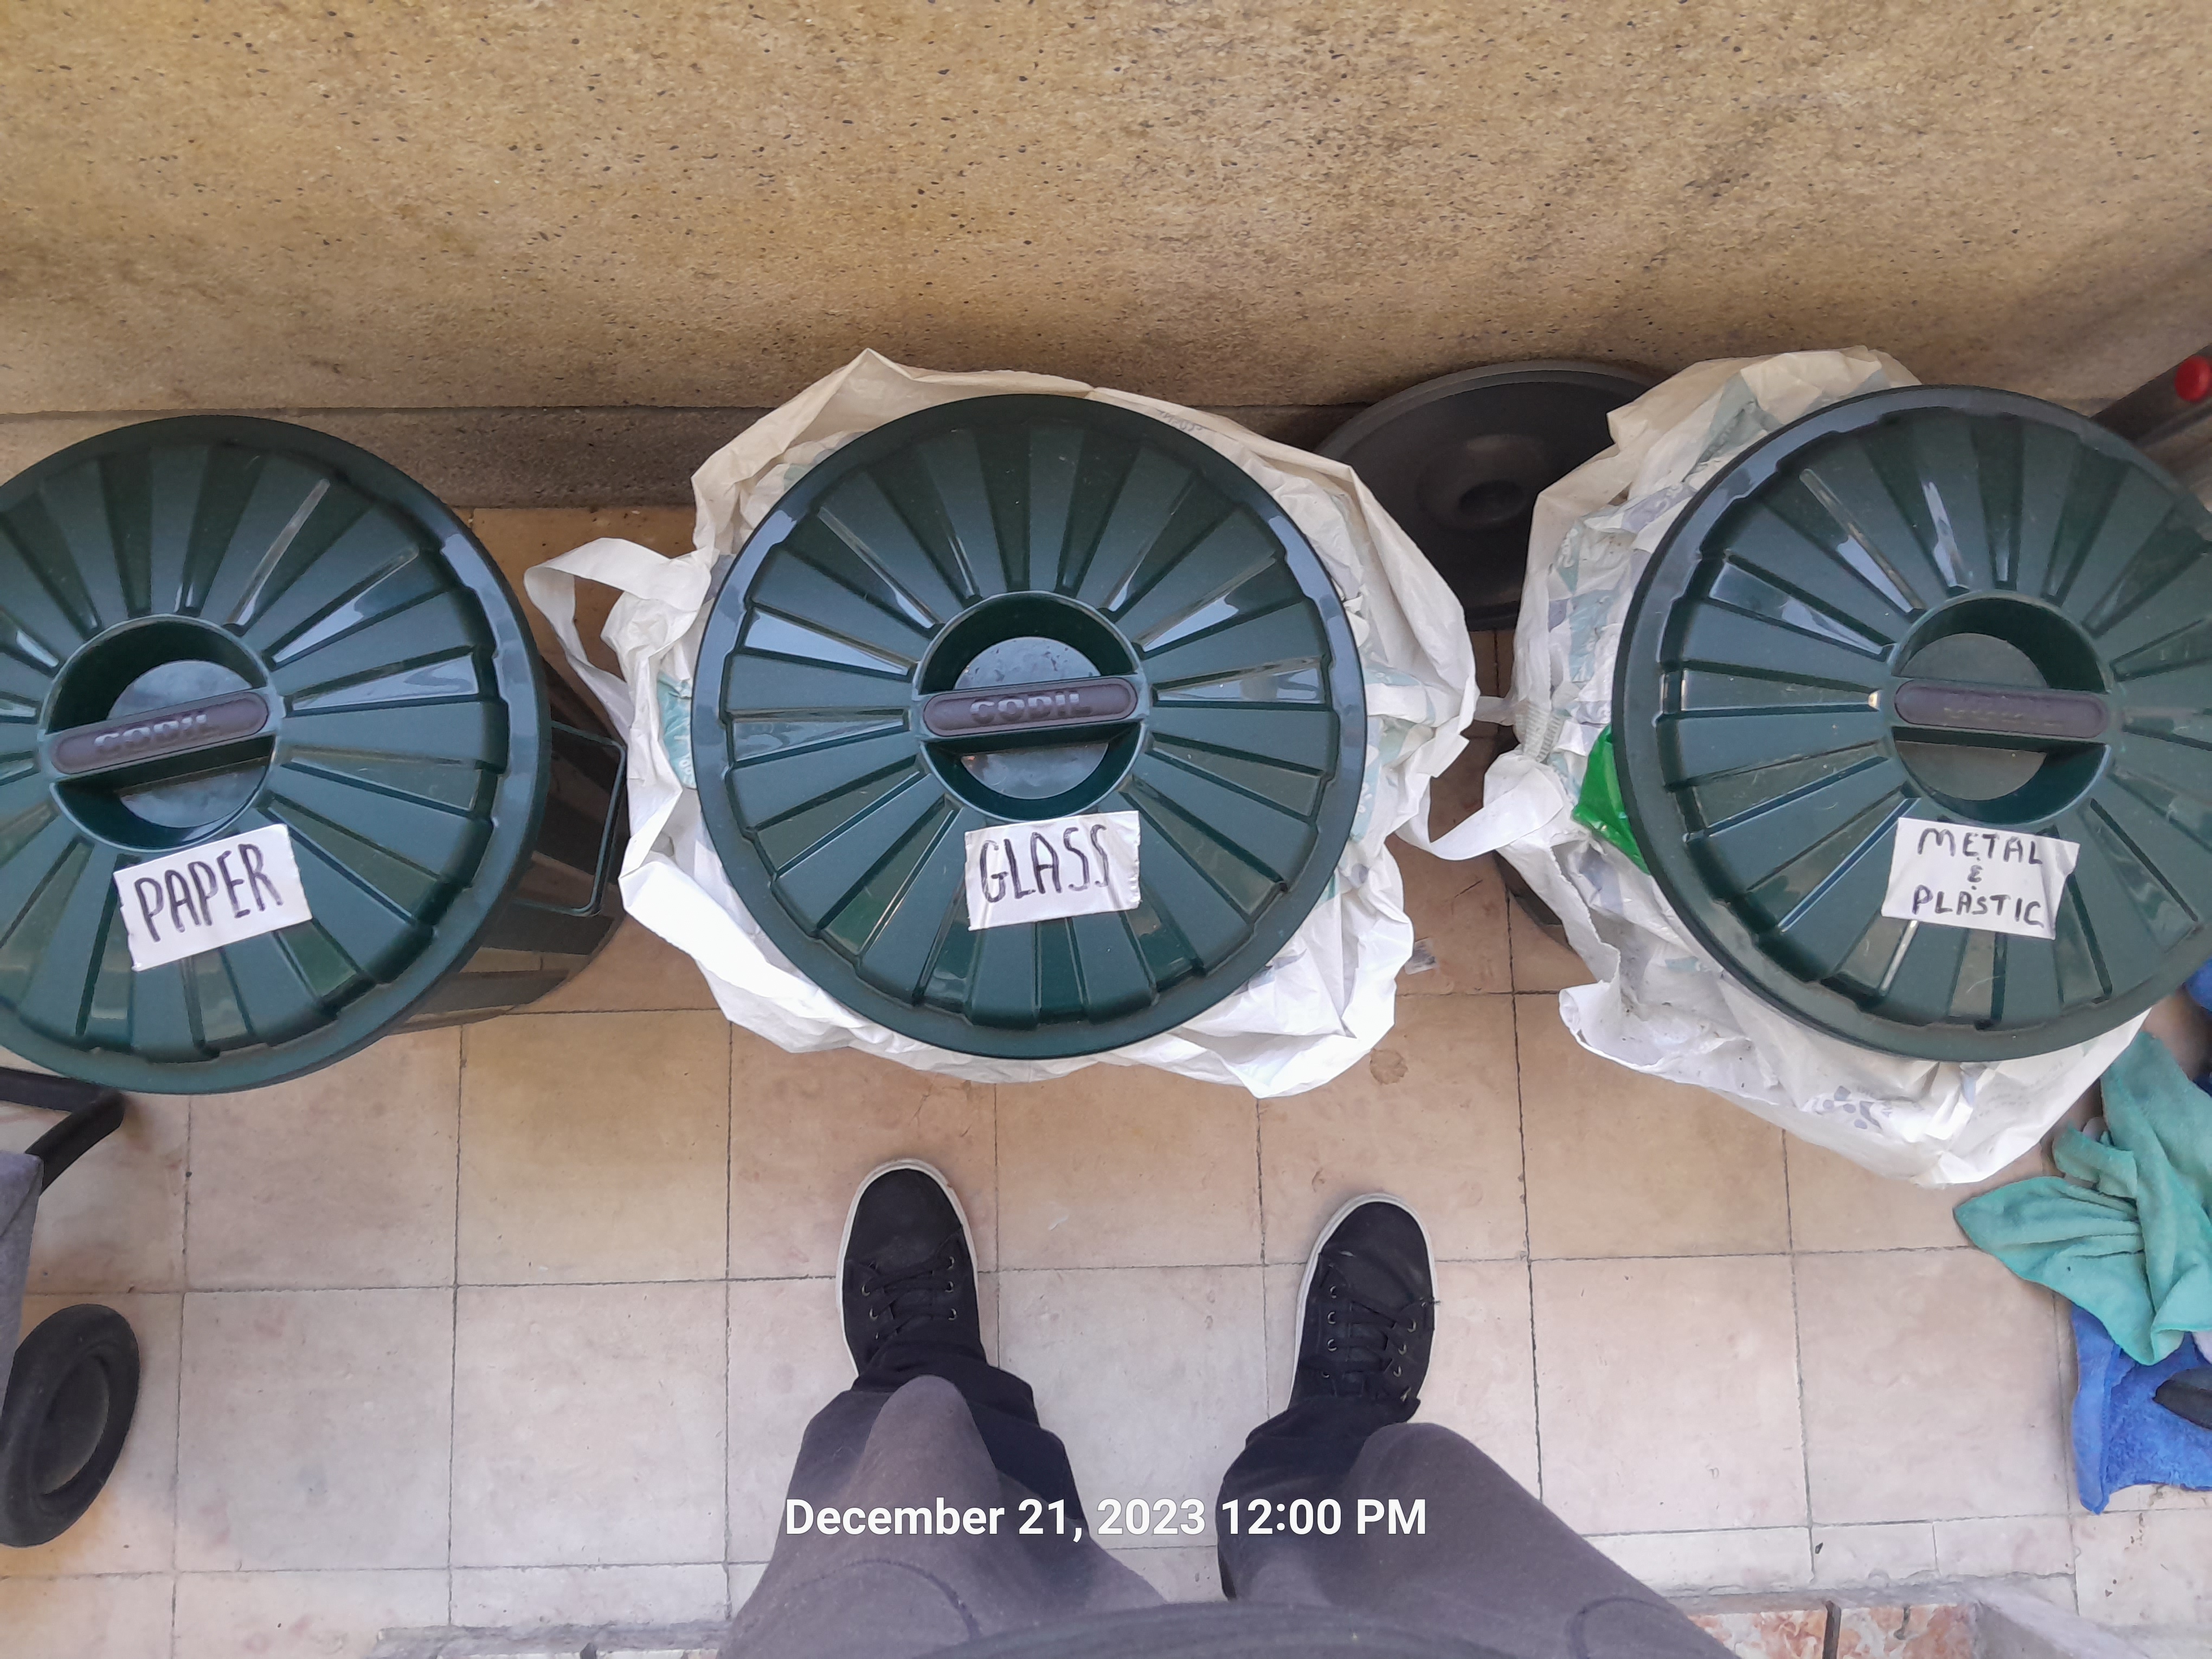 photo of bins